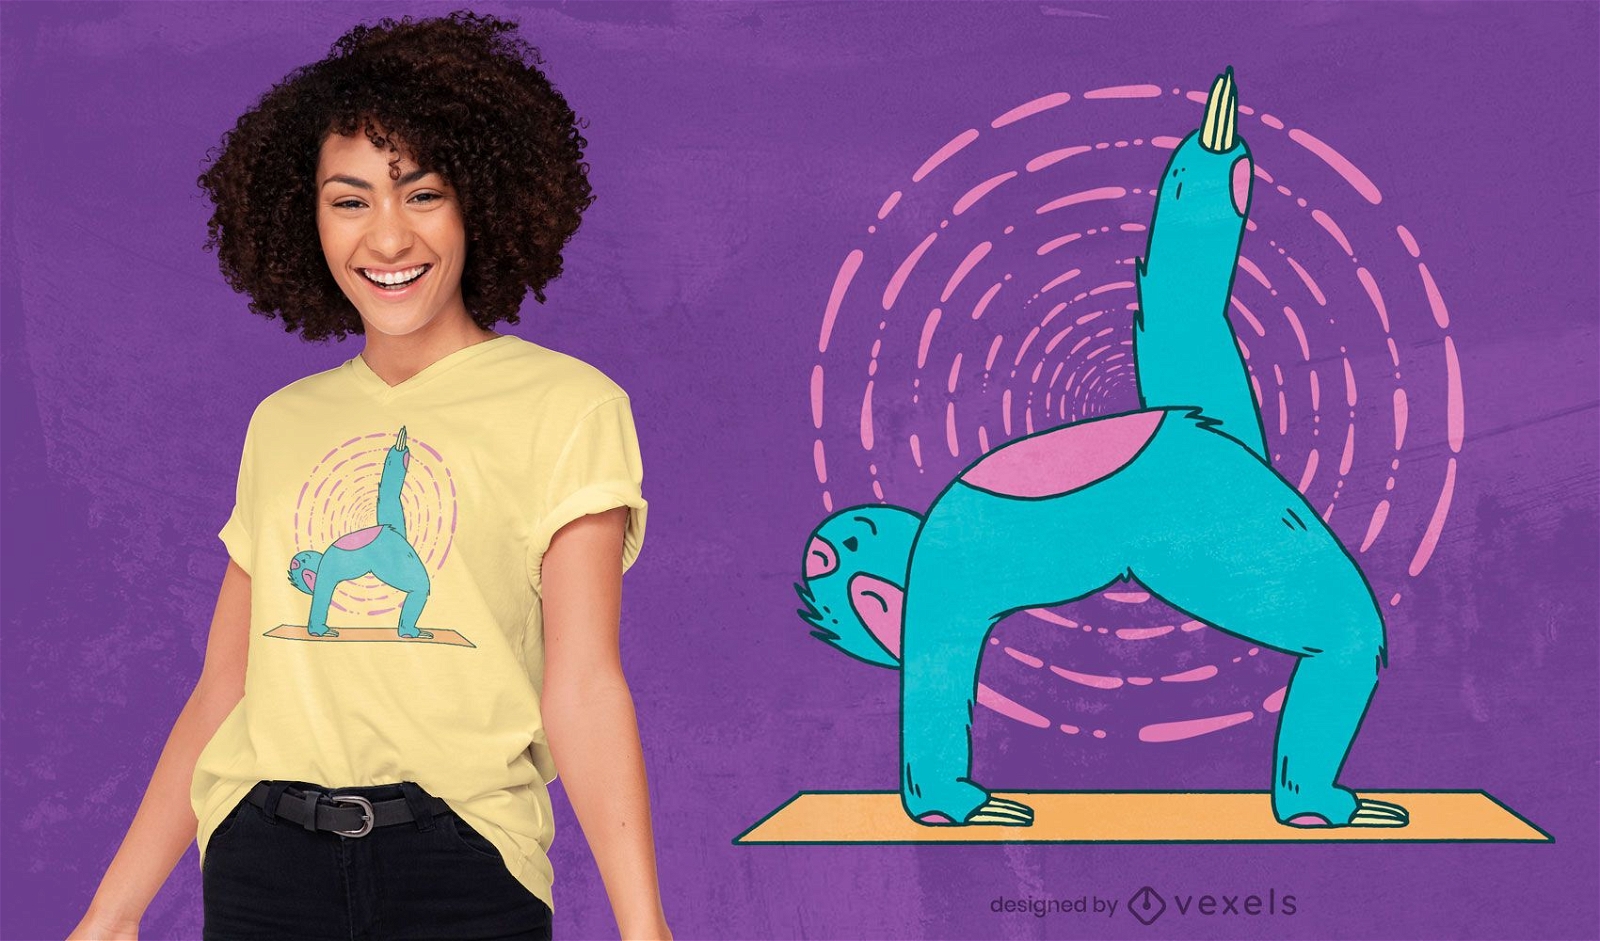 Faultier, das Yoga-Pose-T-Shirt-Design tut